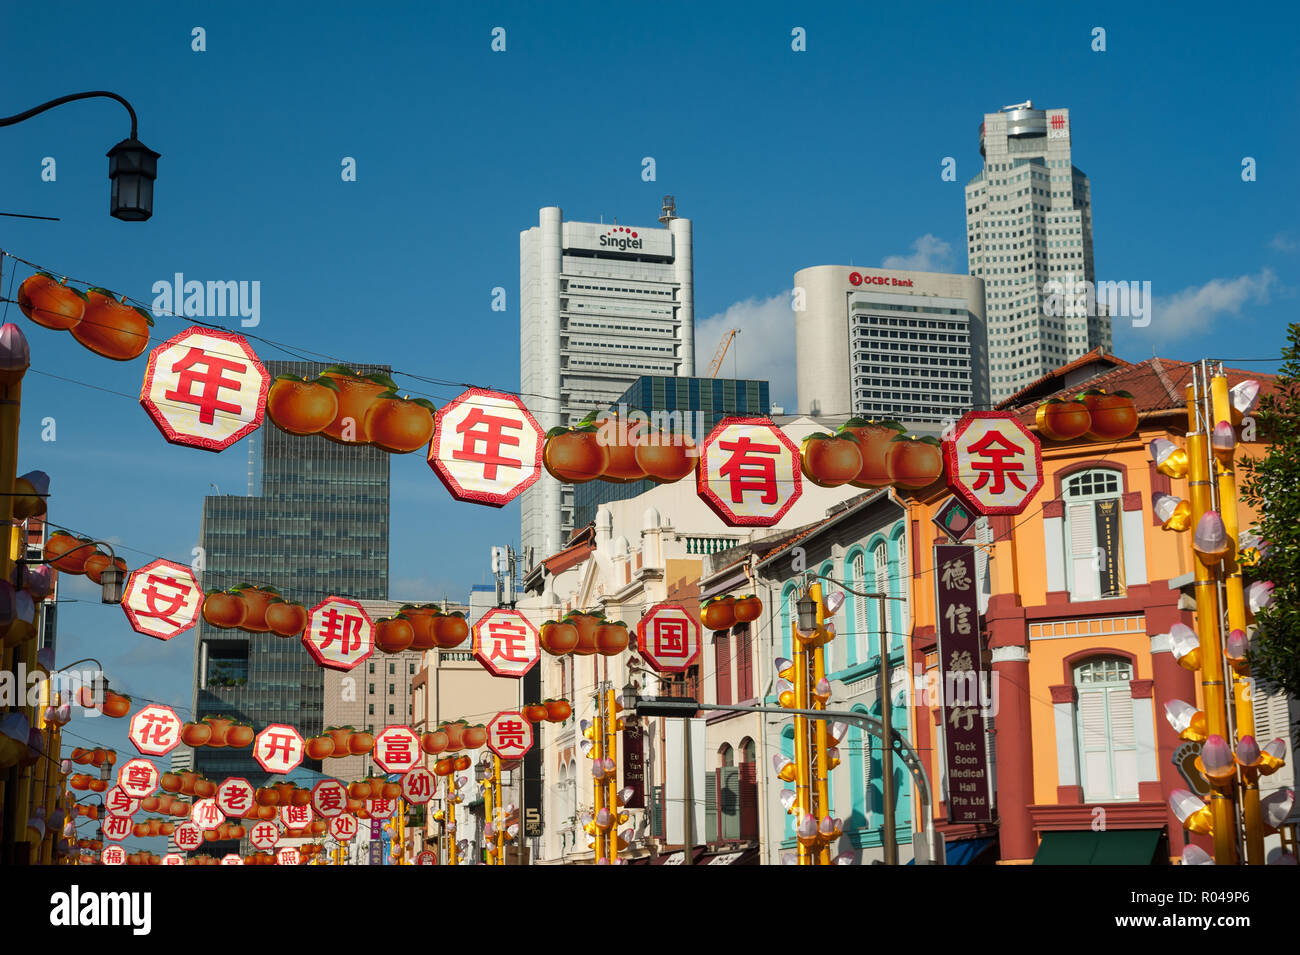 Singapore, Republic of Singapore, Colorful street scene in Chinatown Stock Photo